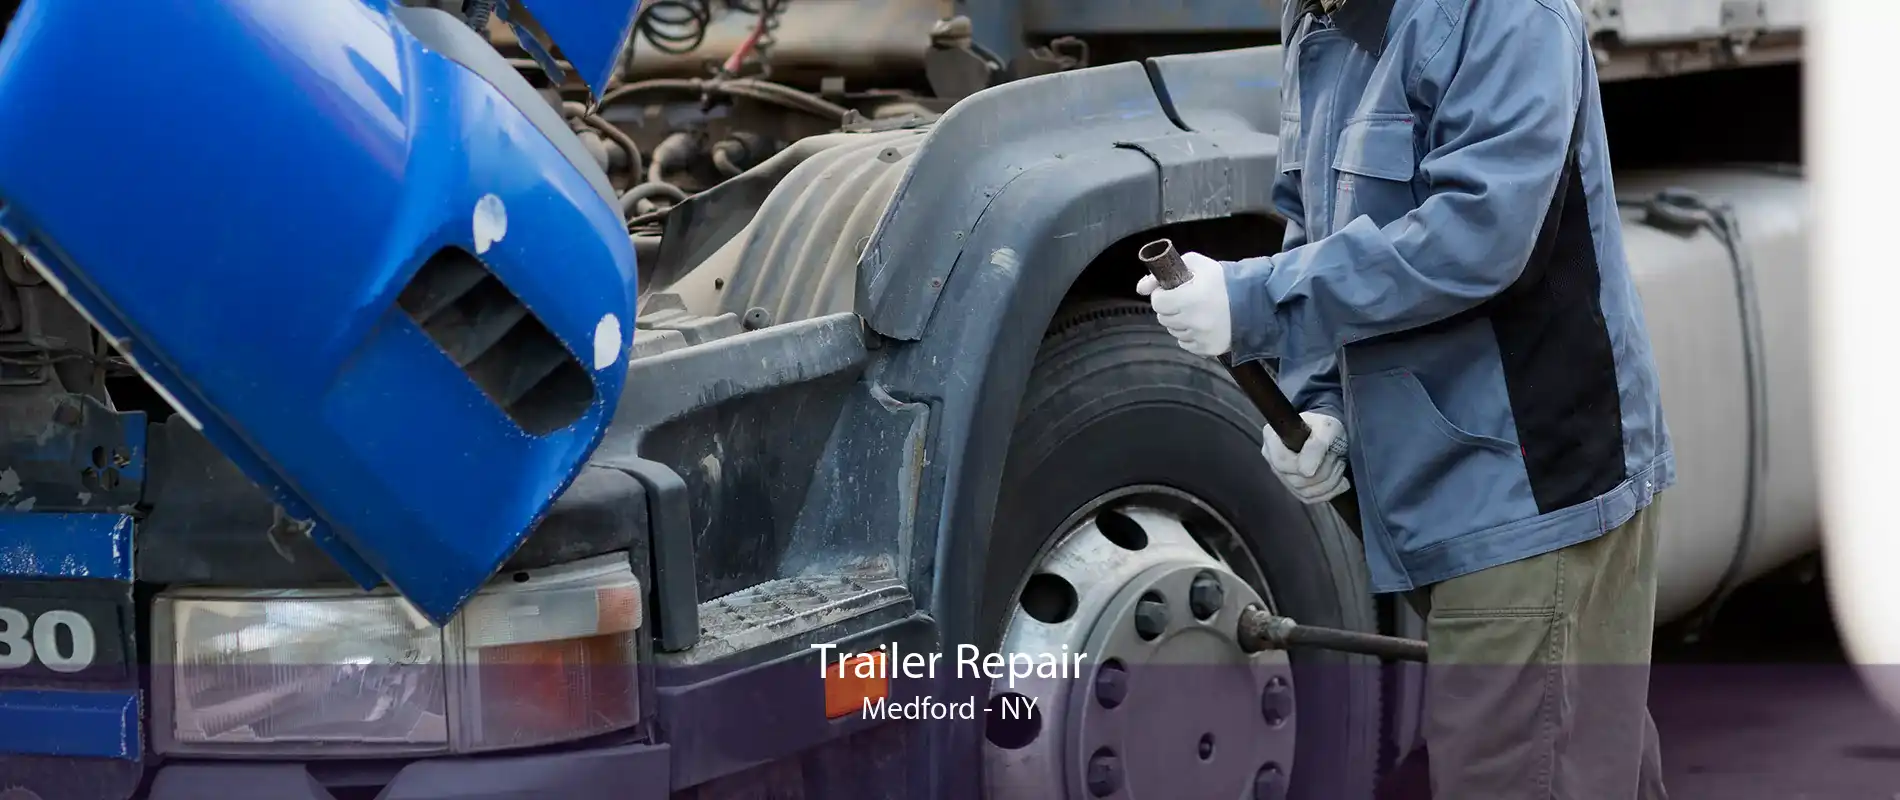 Trailer Repair Medford - NY